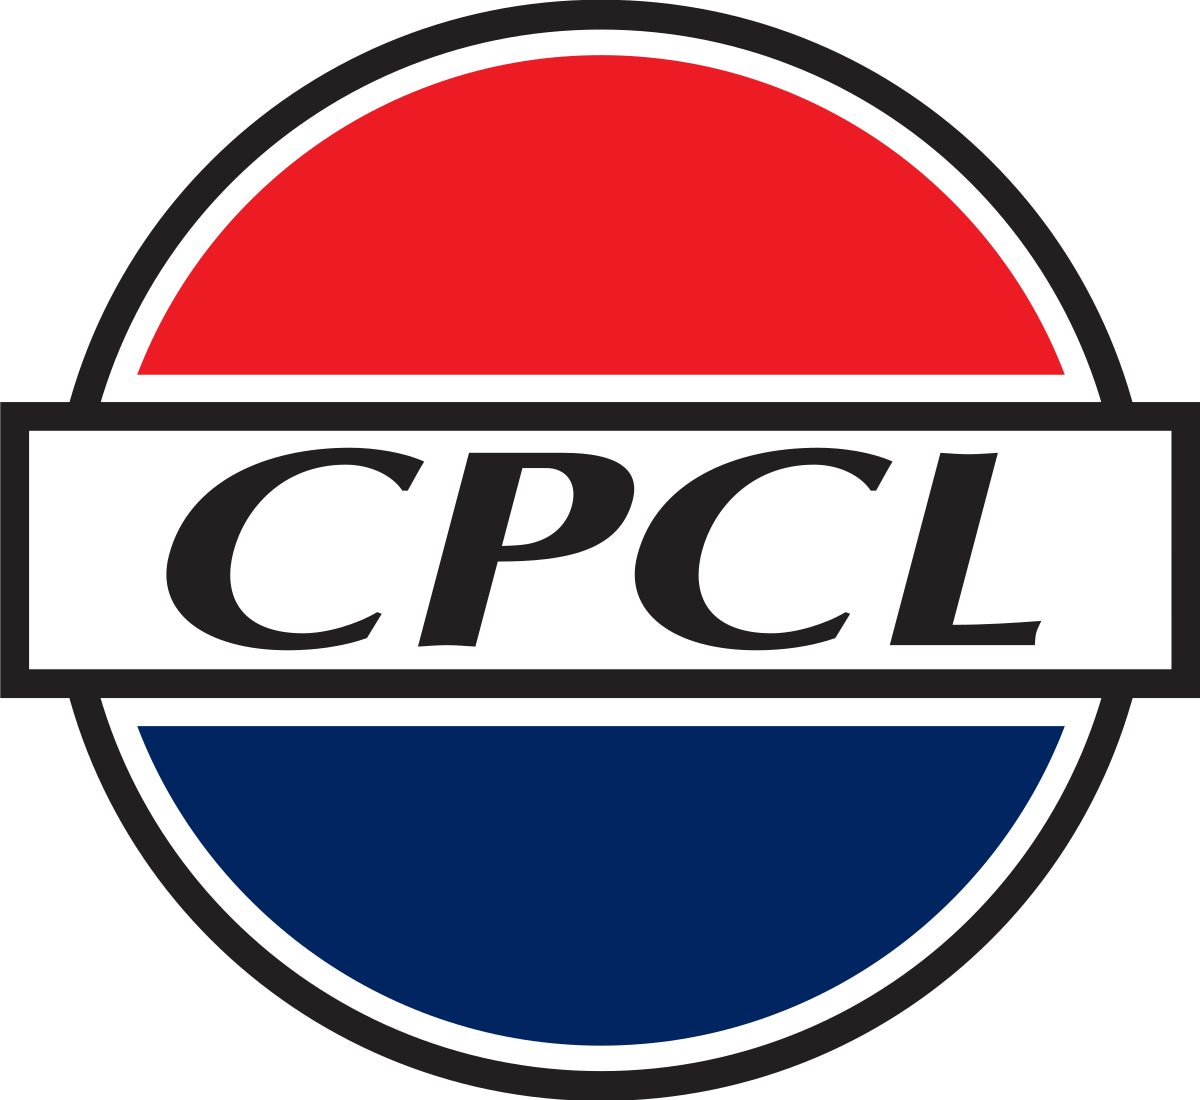 chennai petroleum corporation limited (cpcl)